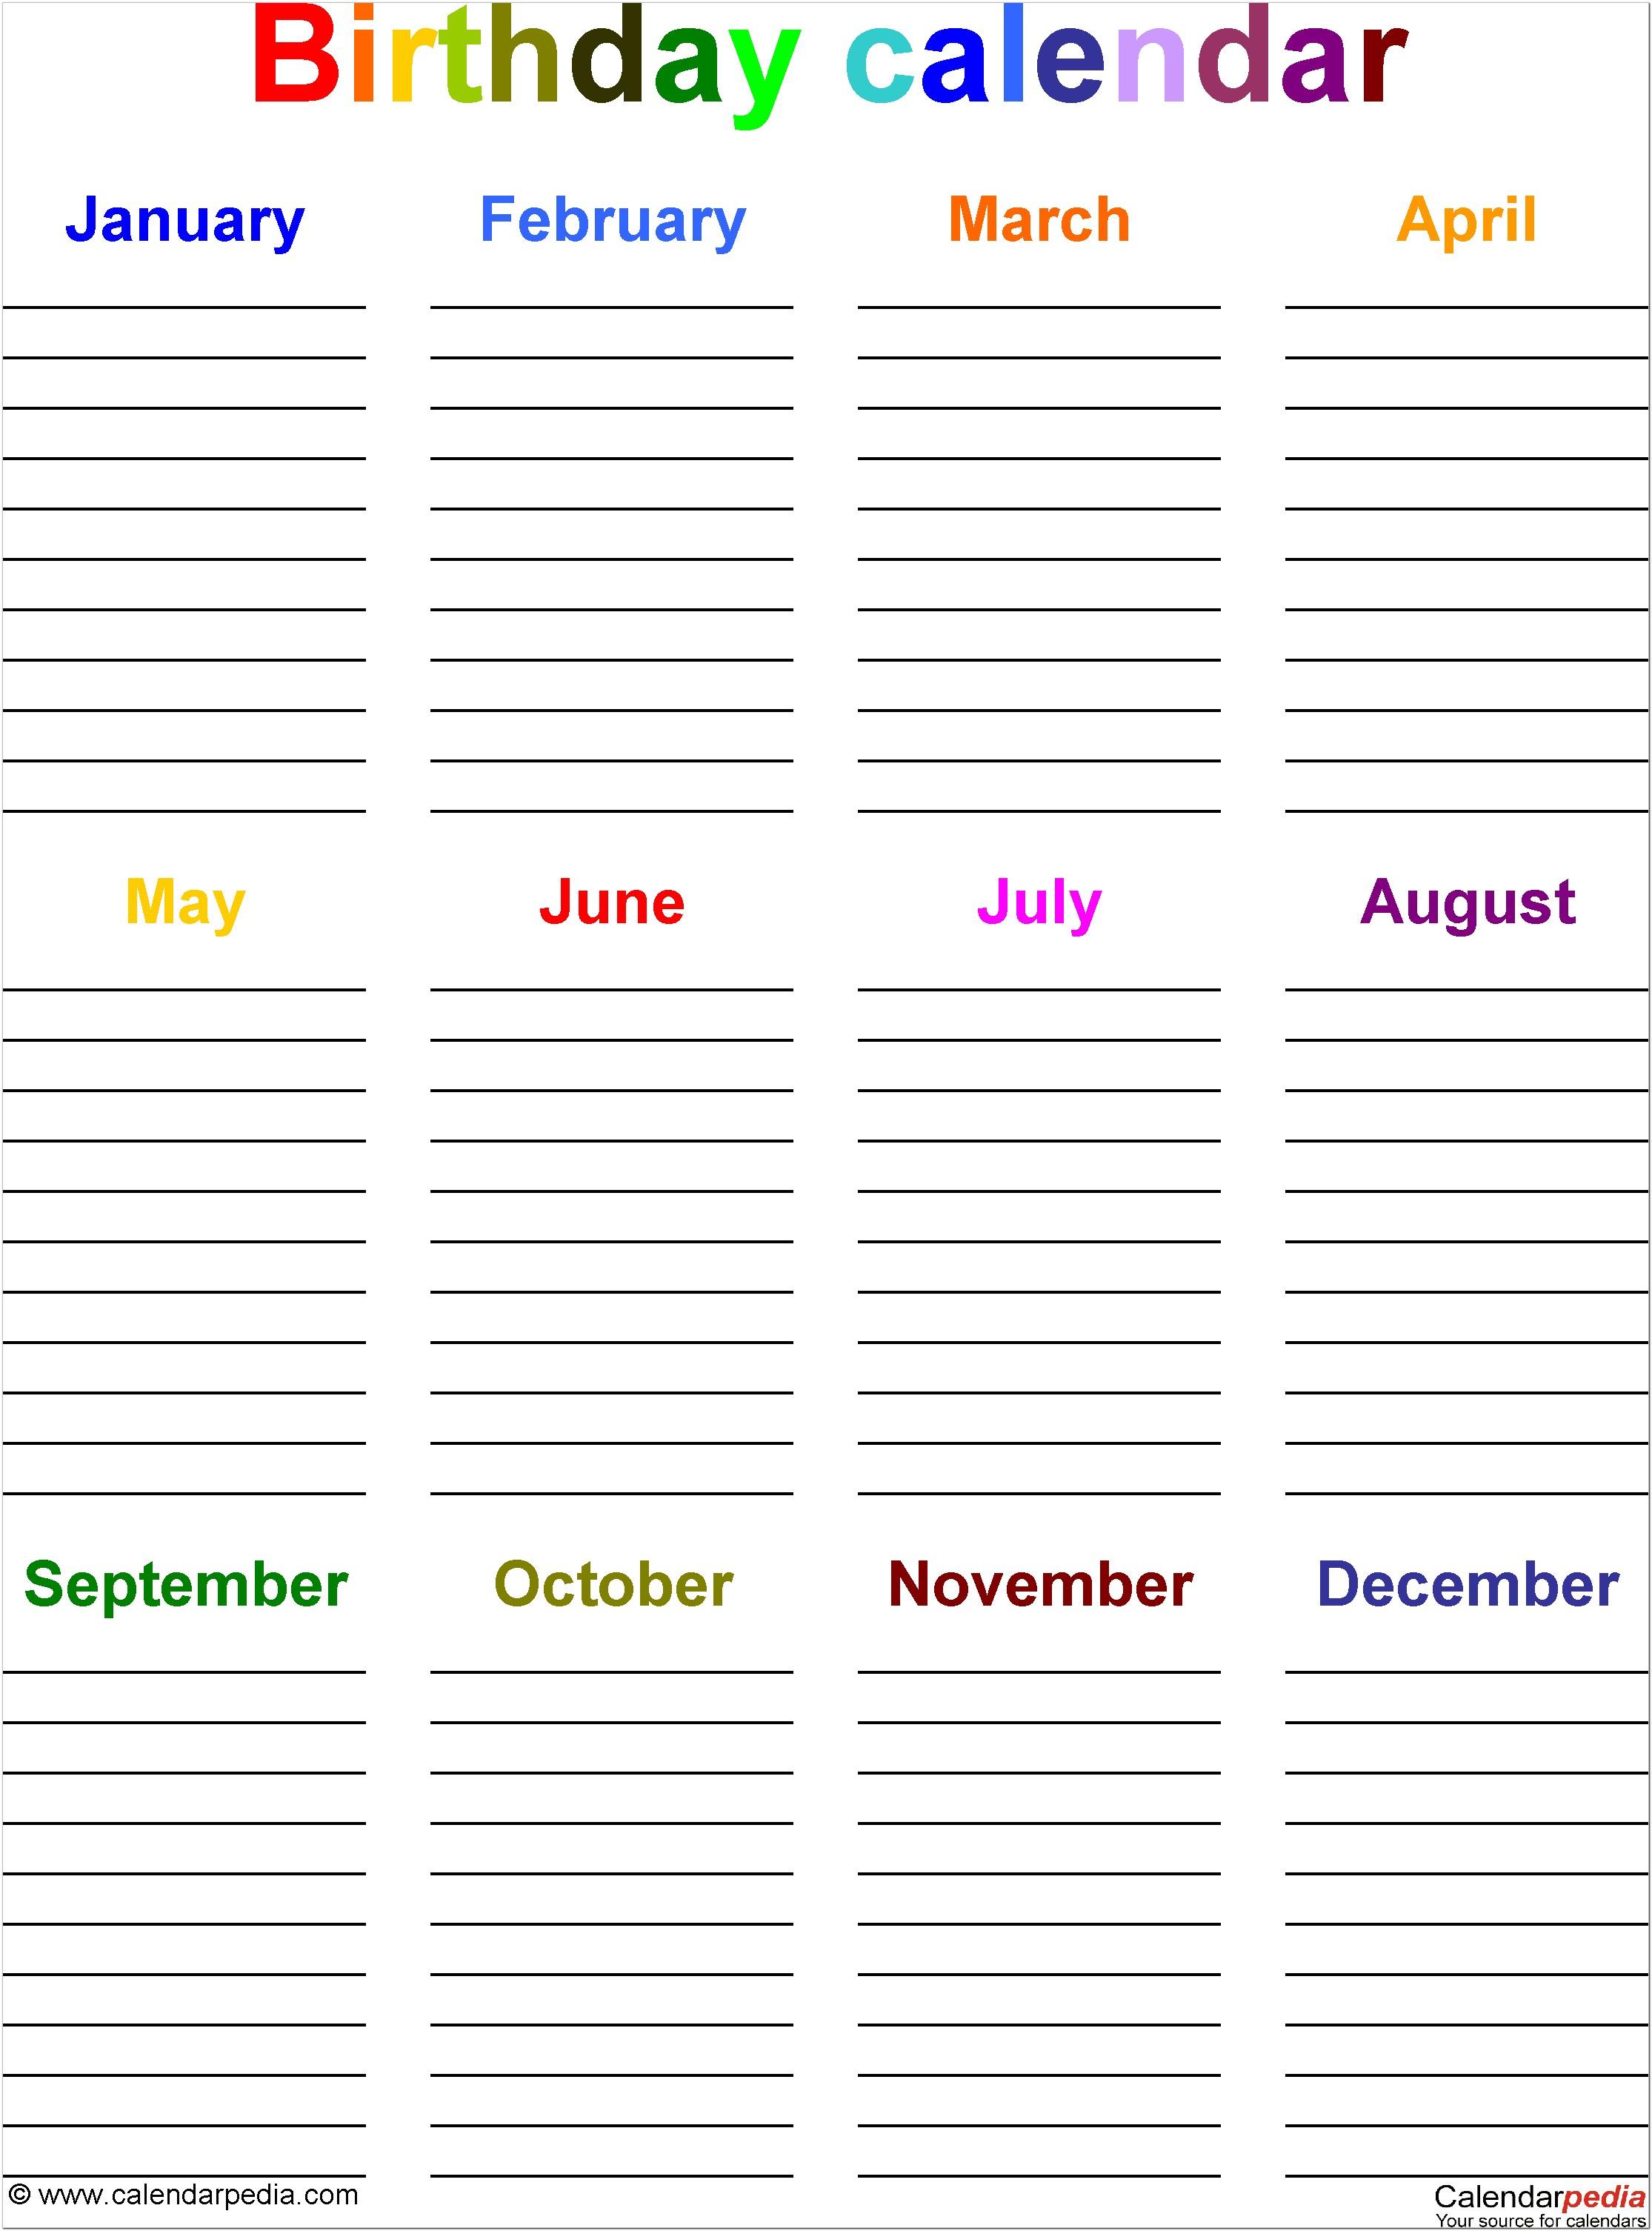 Birthday Calendars Free Printable